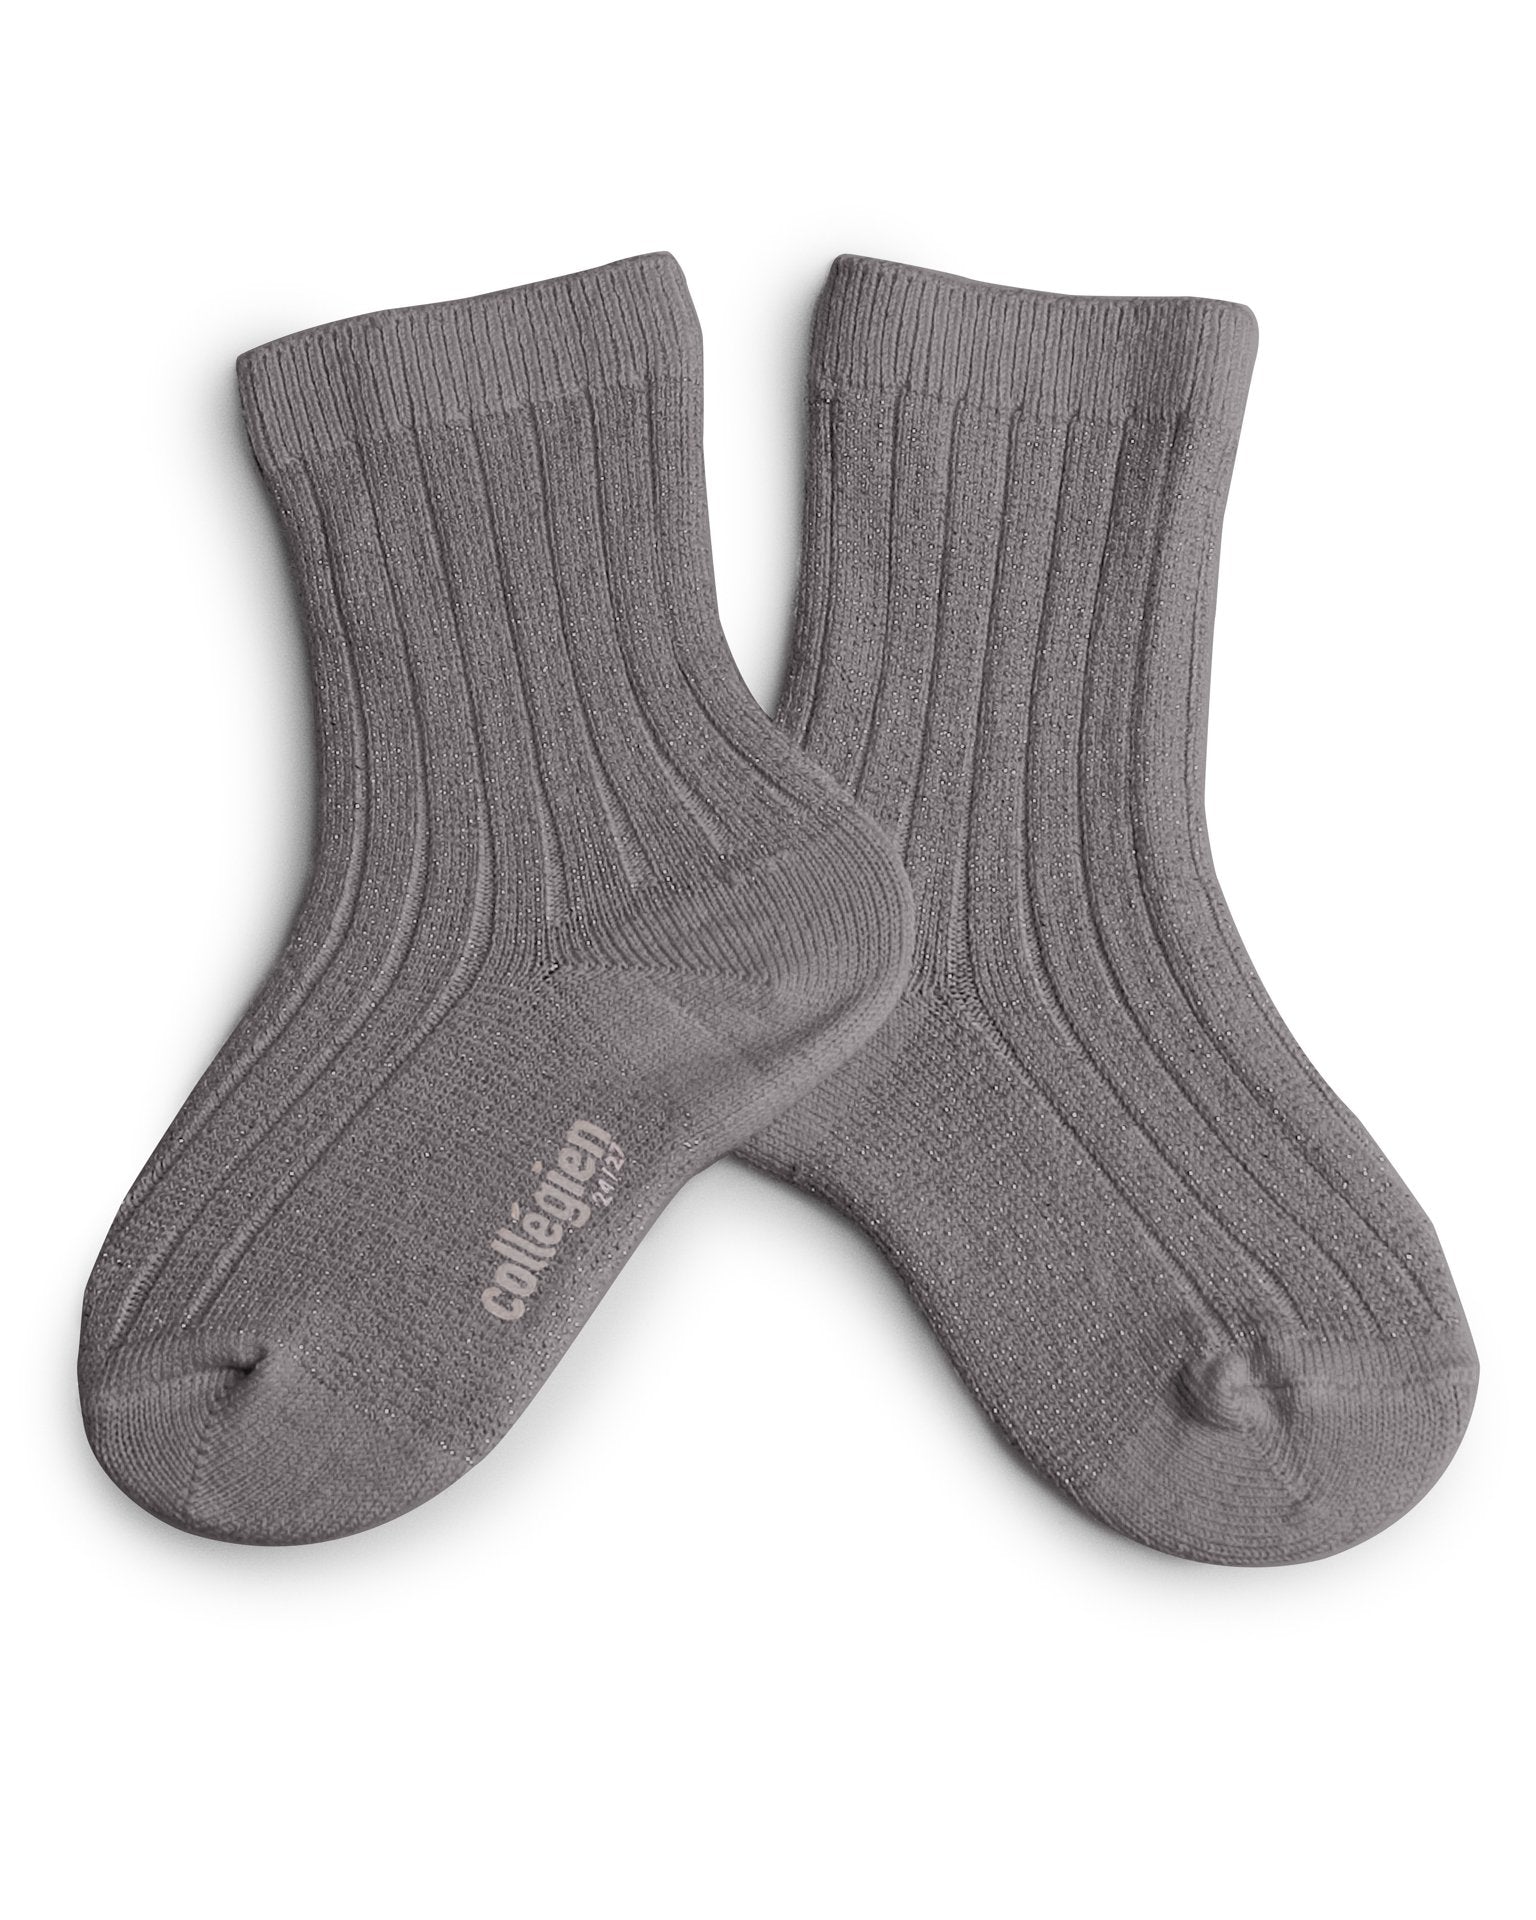 Little collegien accessories victoire crew socks in gris galet